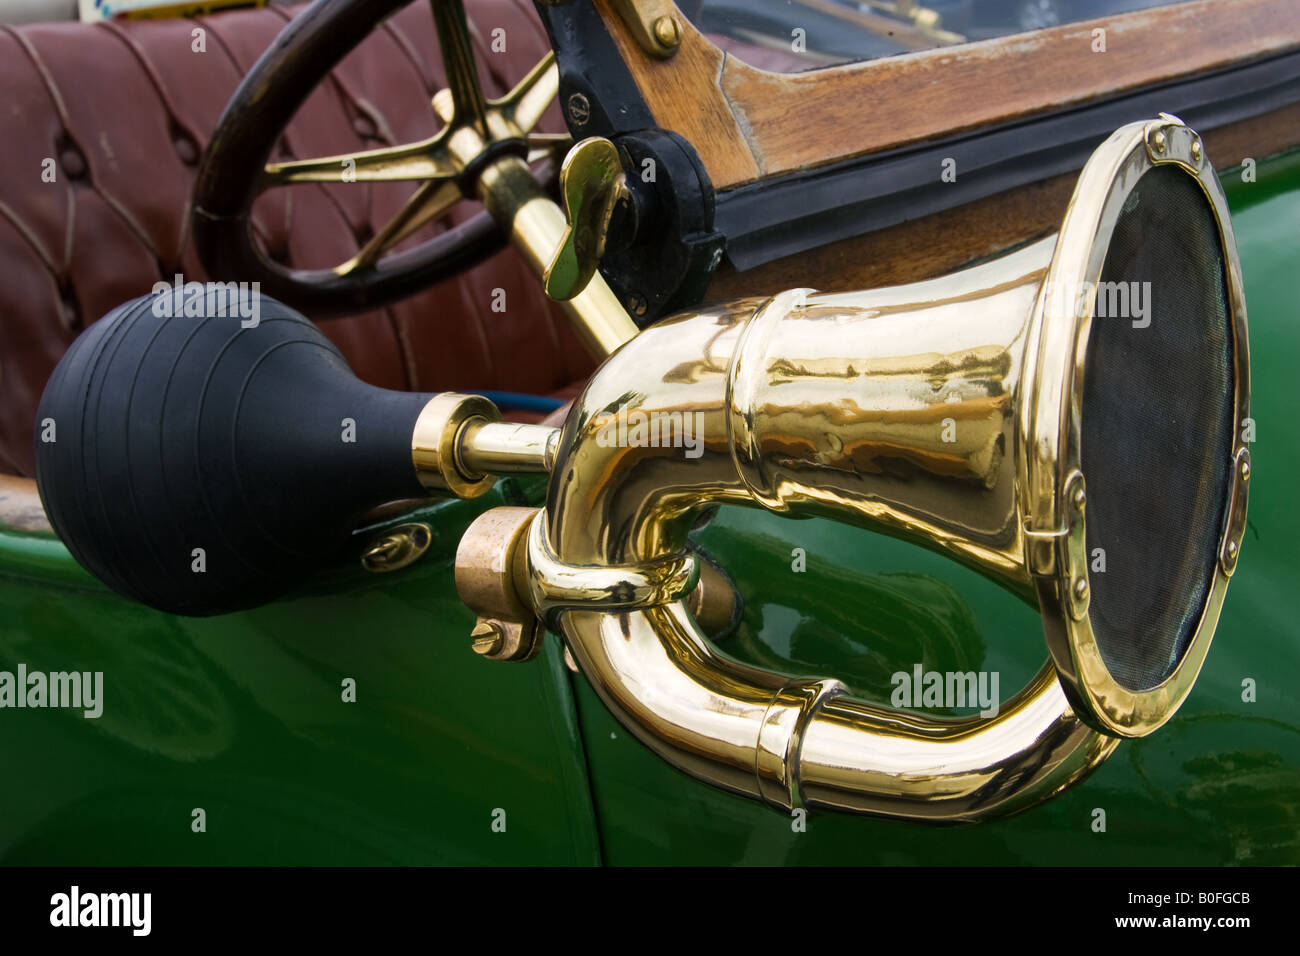 Auto-Hupe stockbild. Bild von fahrzeug, hupen, trompete - 5029437